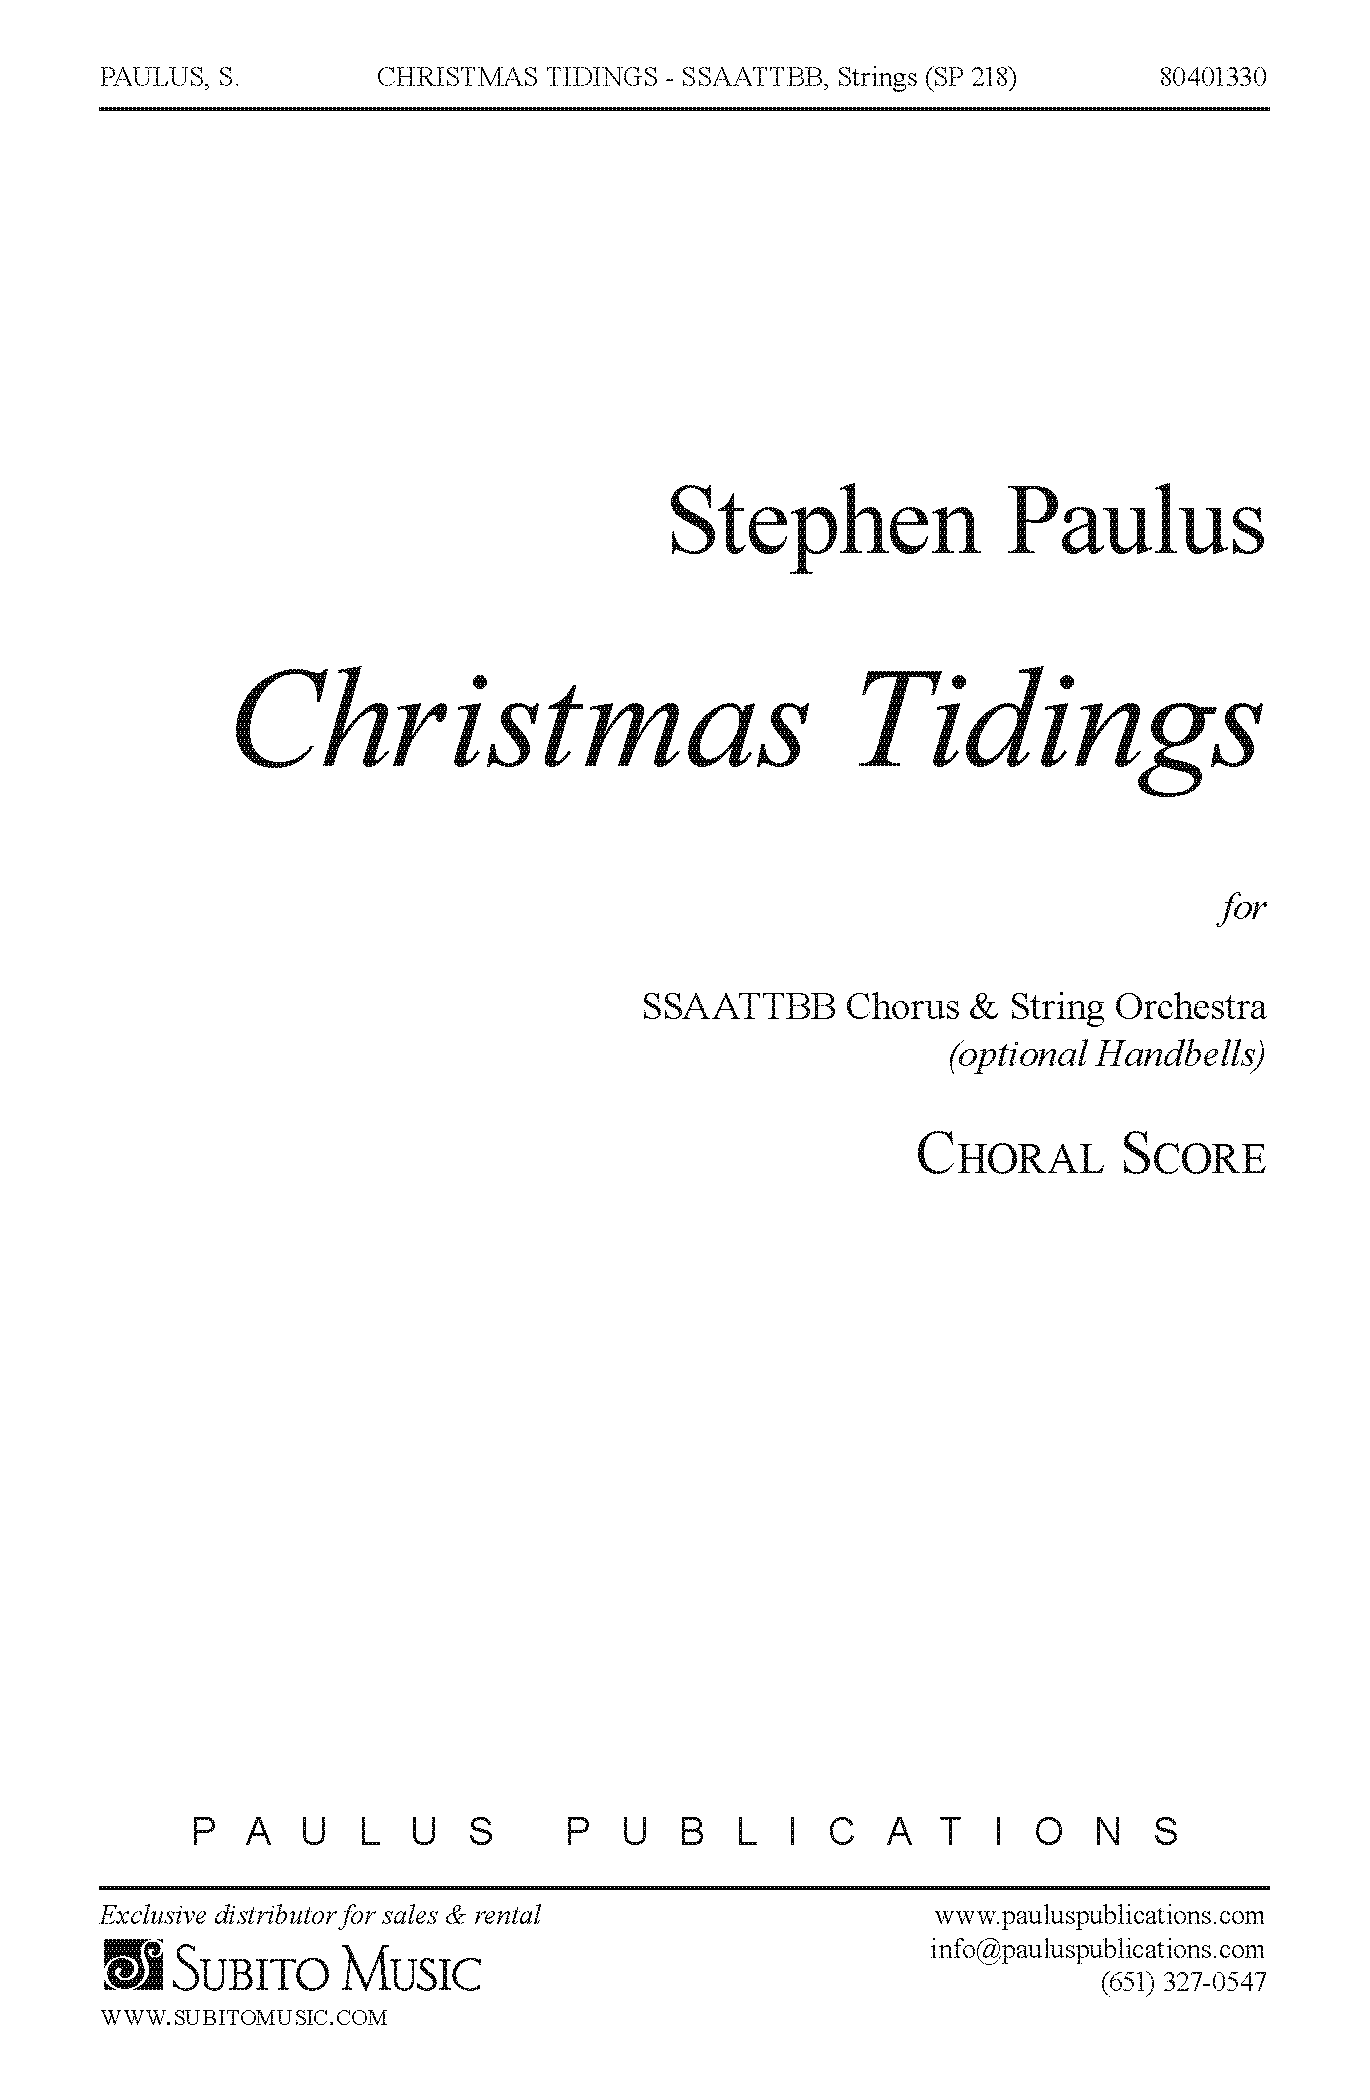 Christmas Tidings (score) for SSAATTBB Chorus & String Orchestra (opt. Handbells)